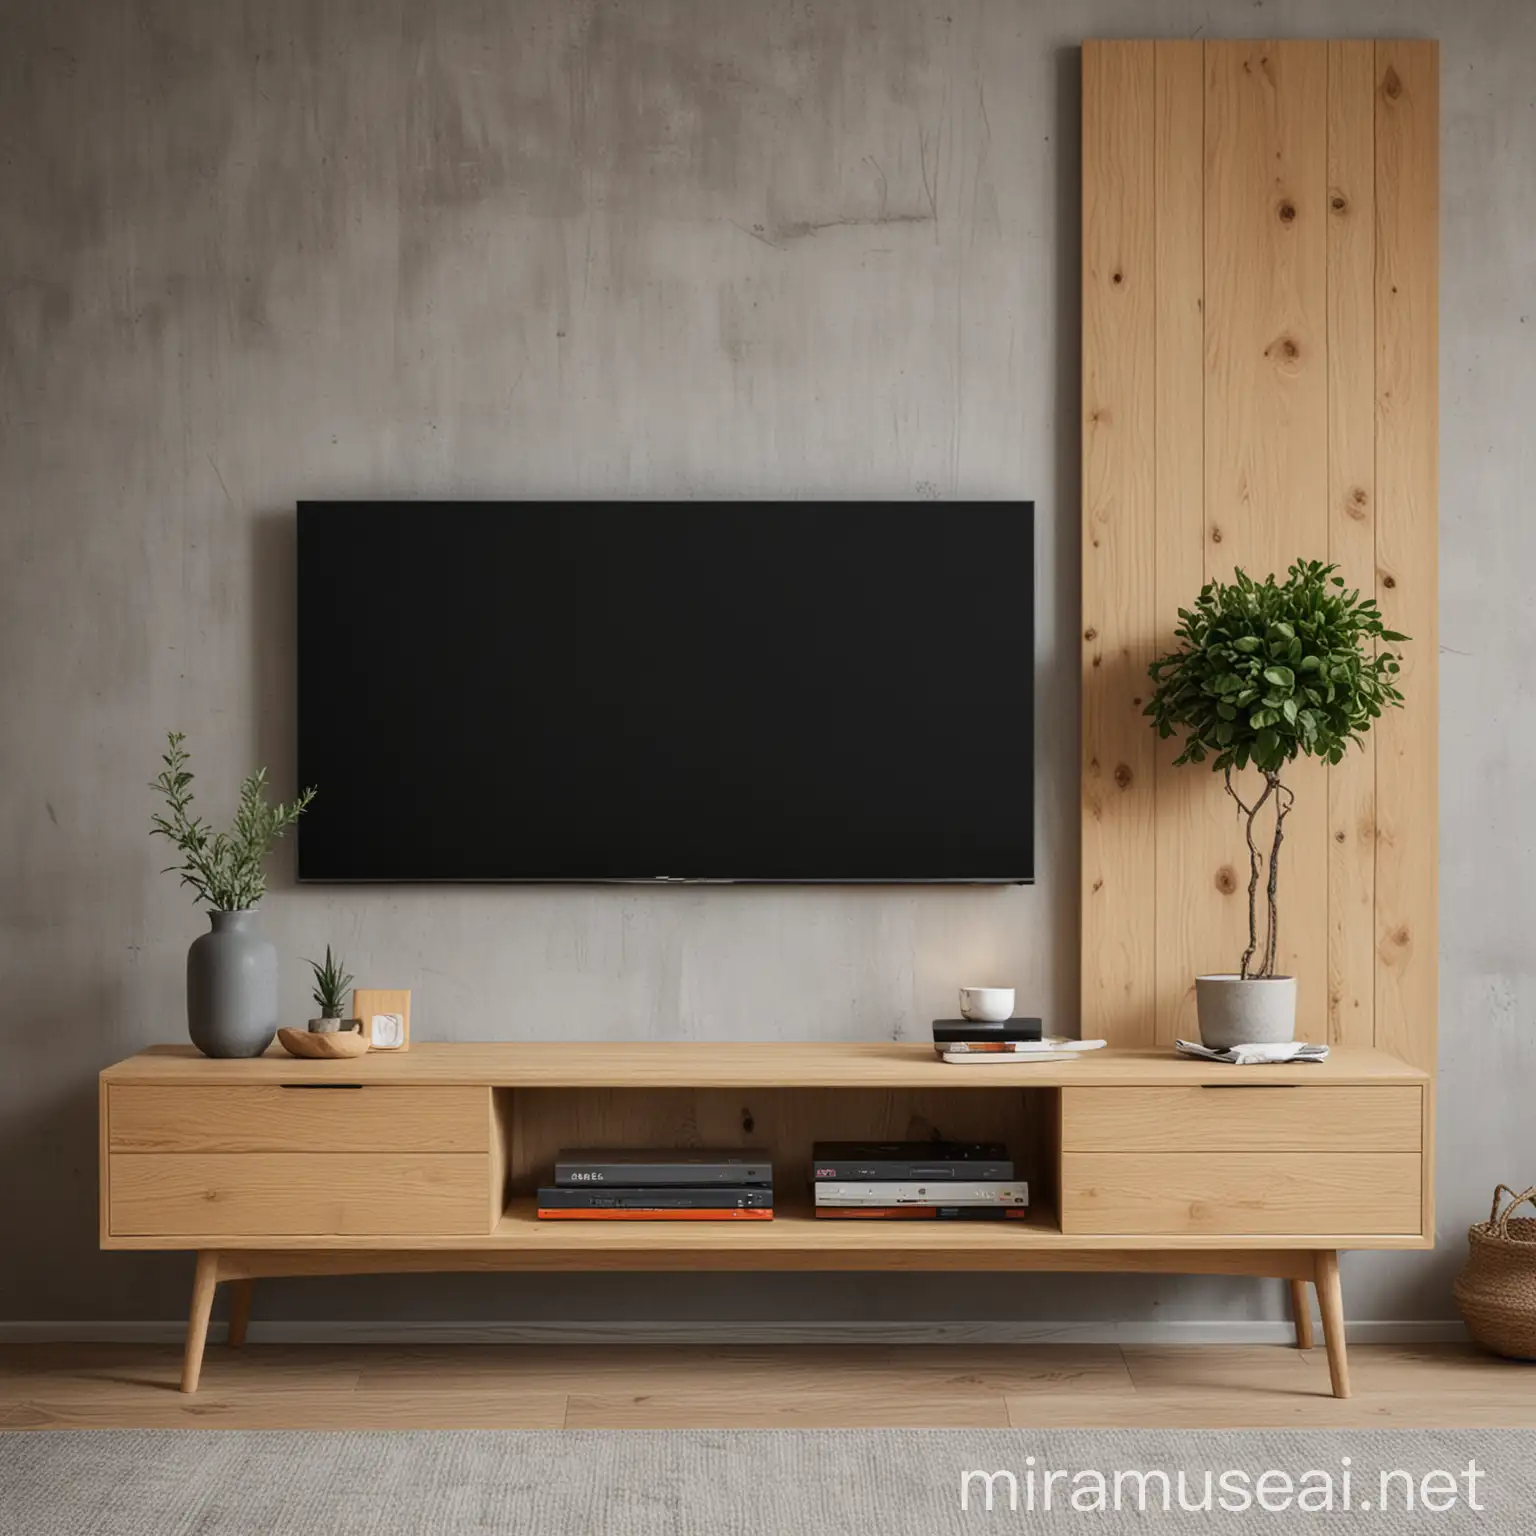 minimalist luxury TV wall with oak board, LED lights, and Scandinavian decor